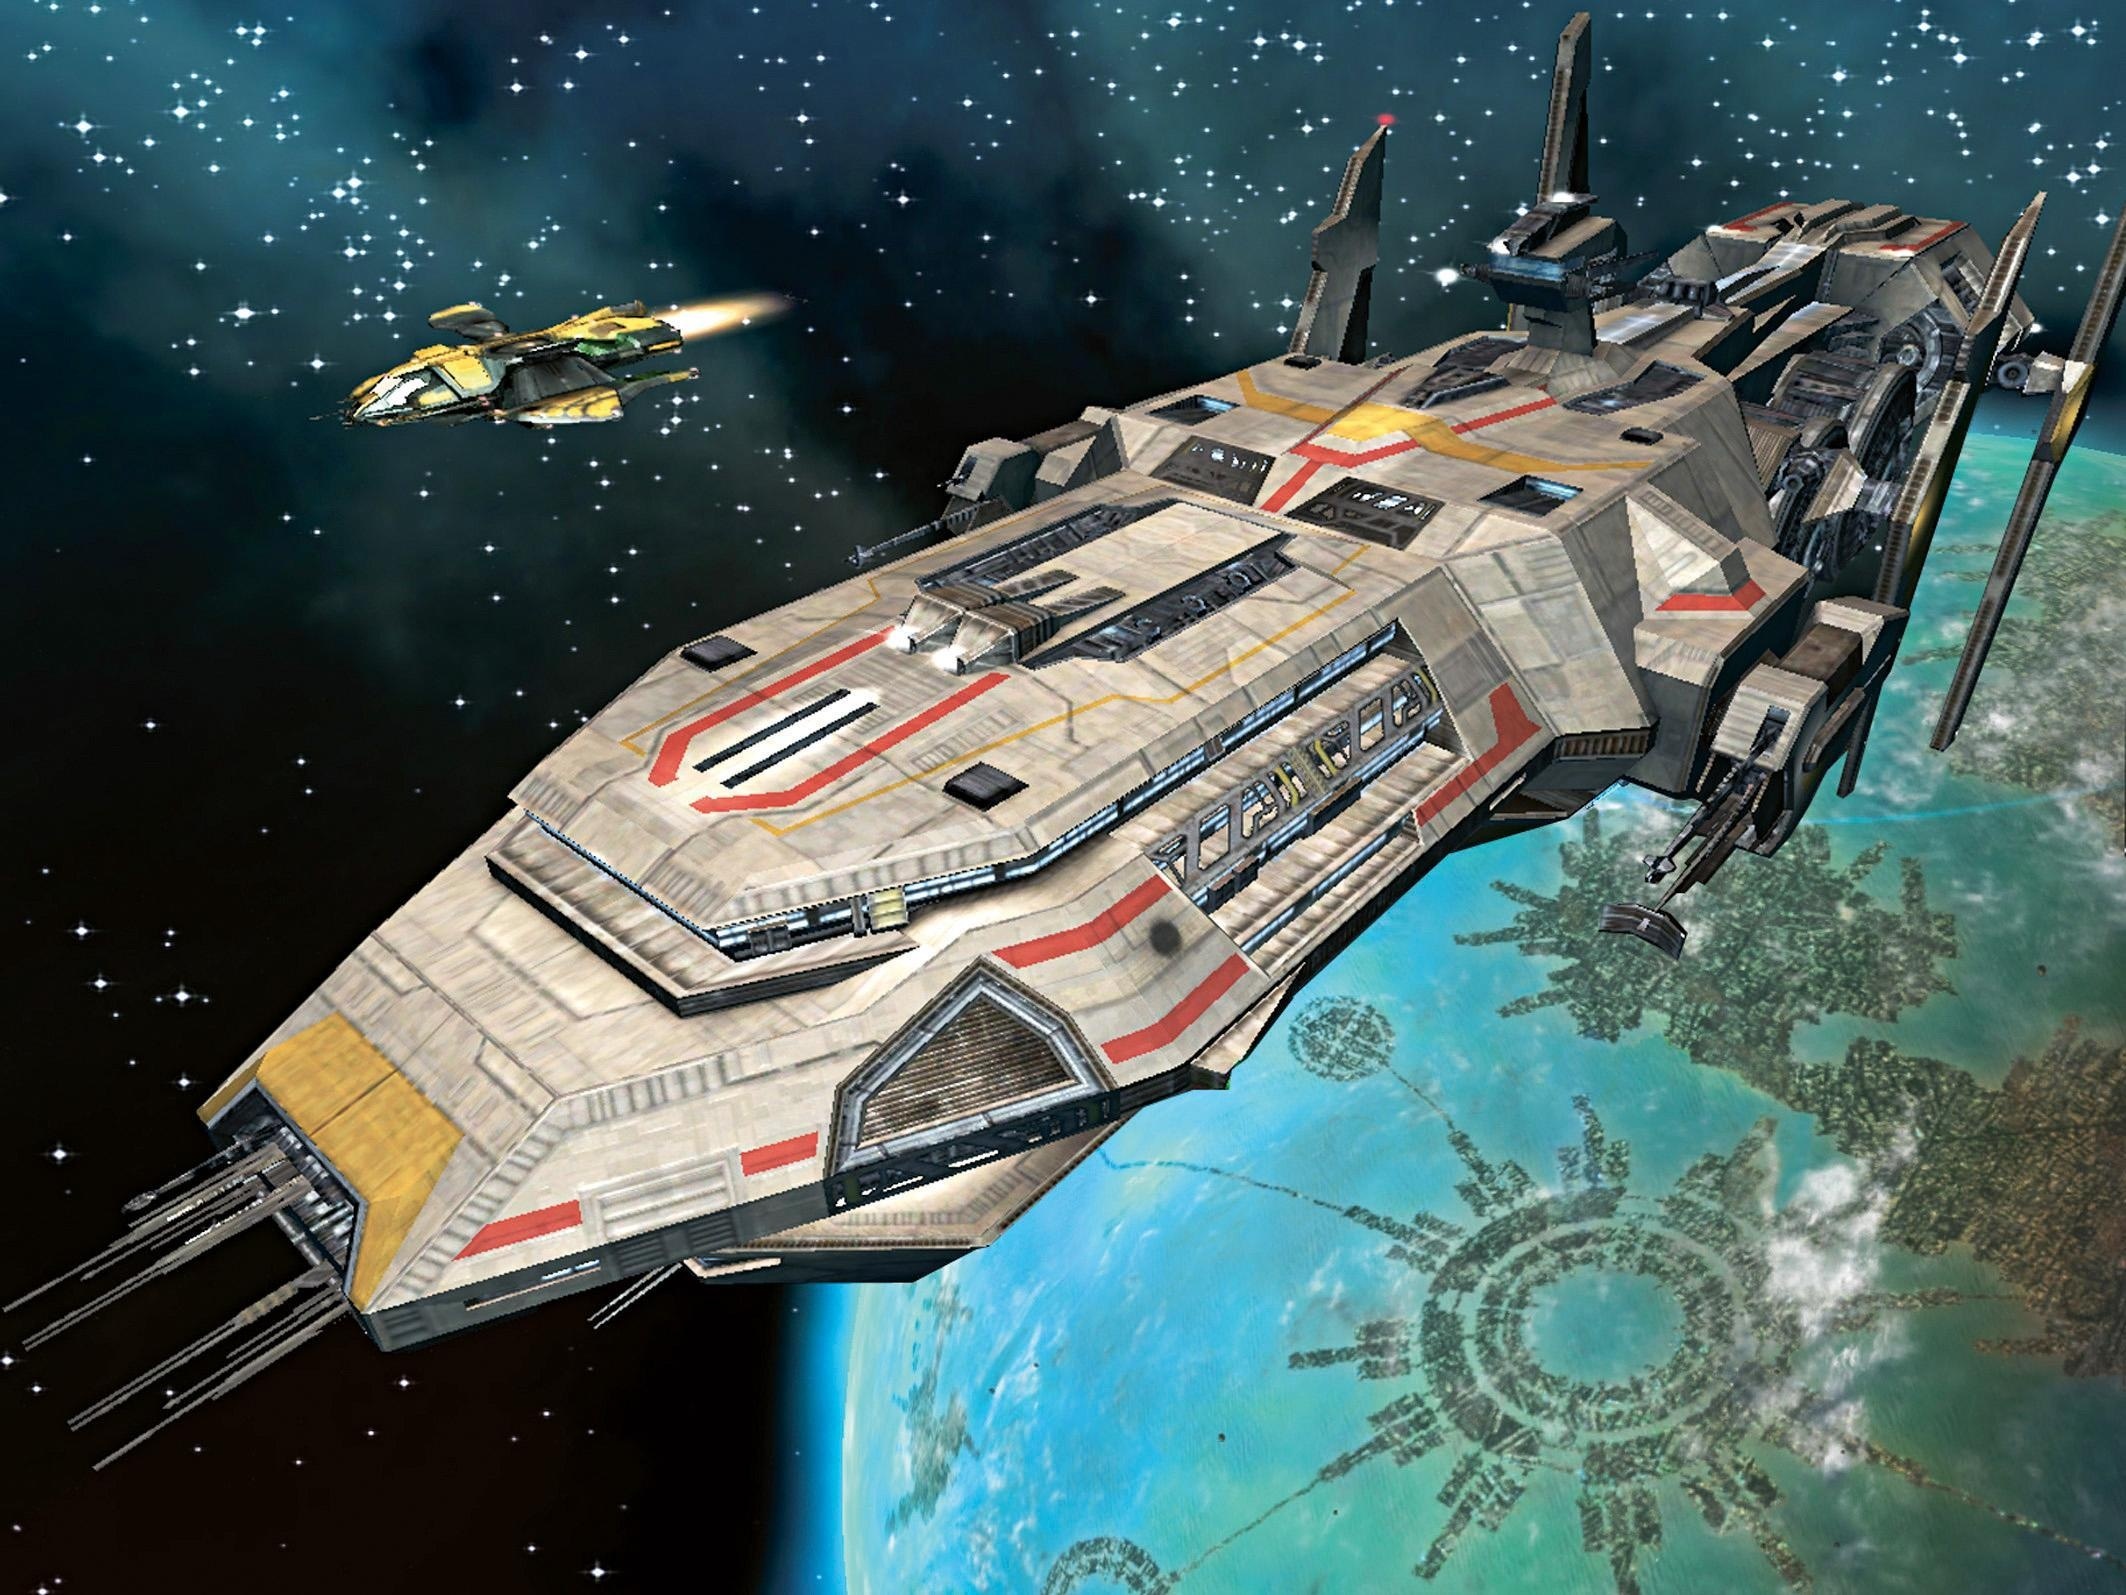 Darkstar One and Terran cruiser above civilized planet